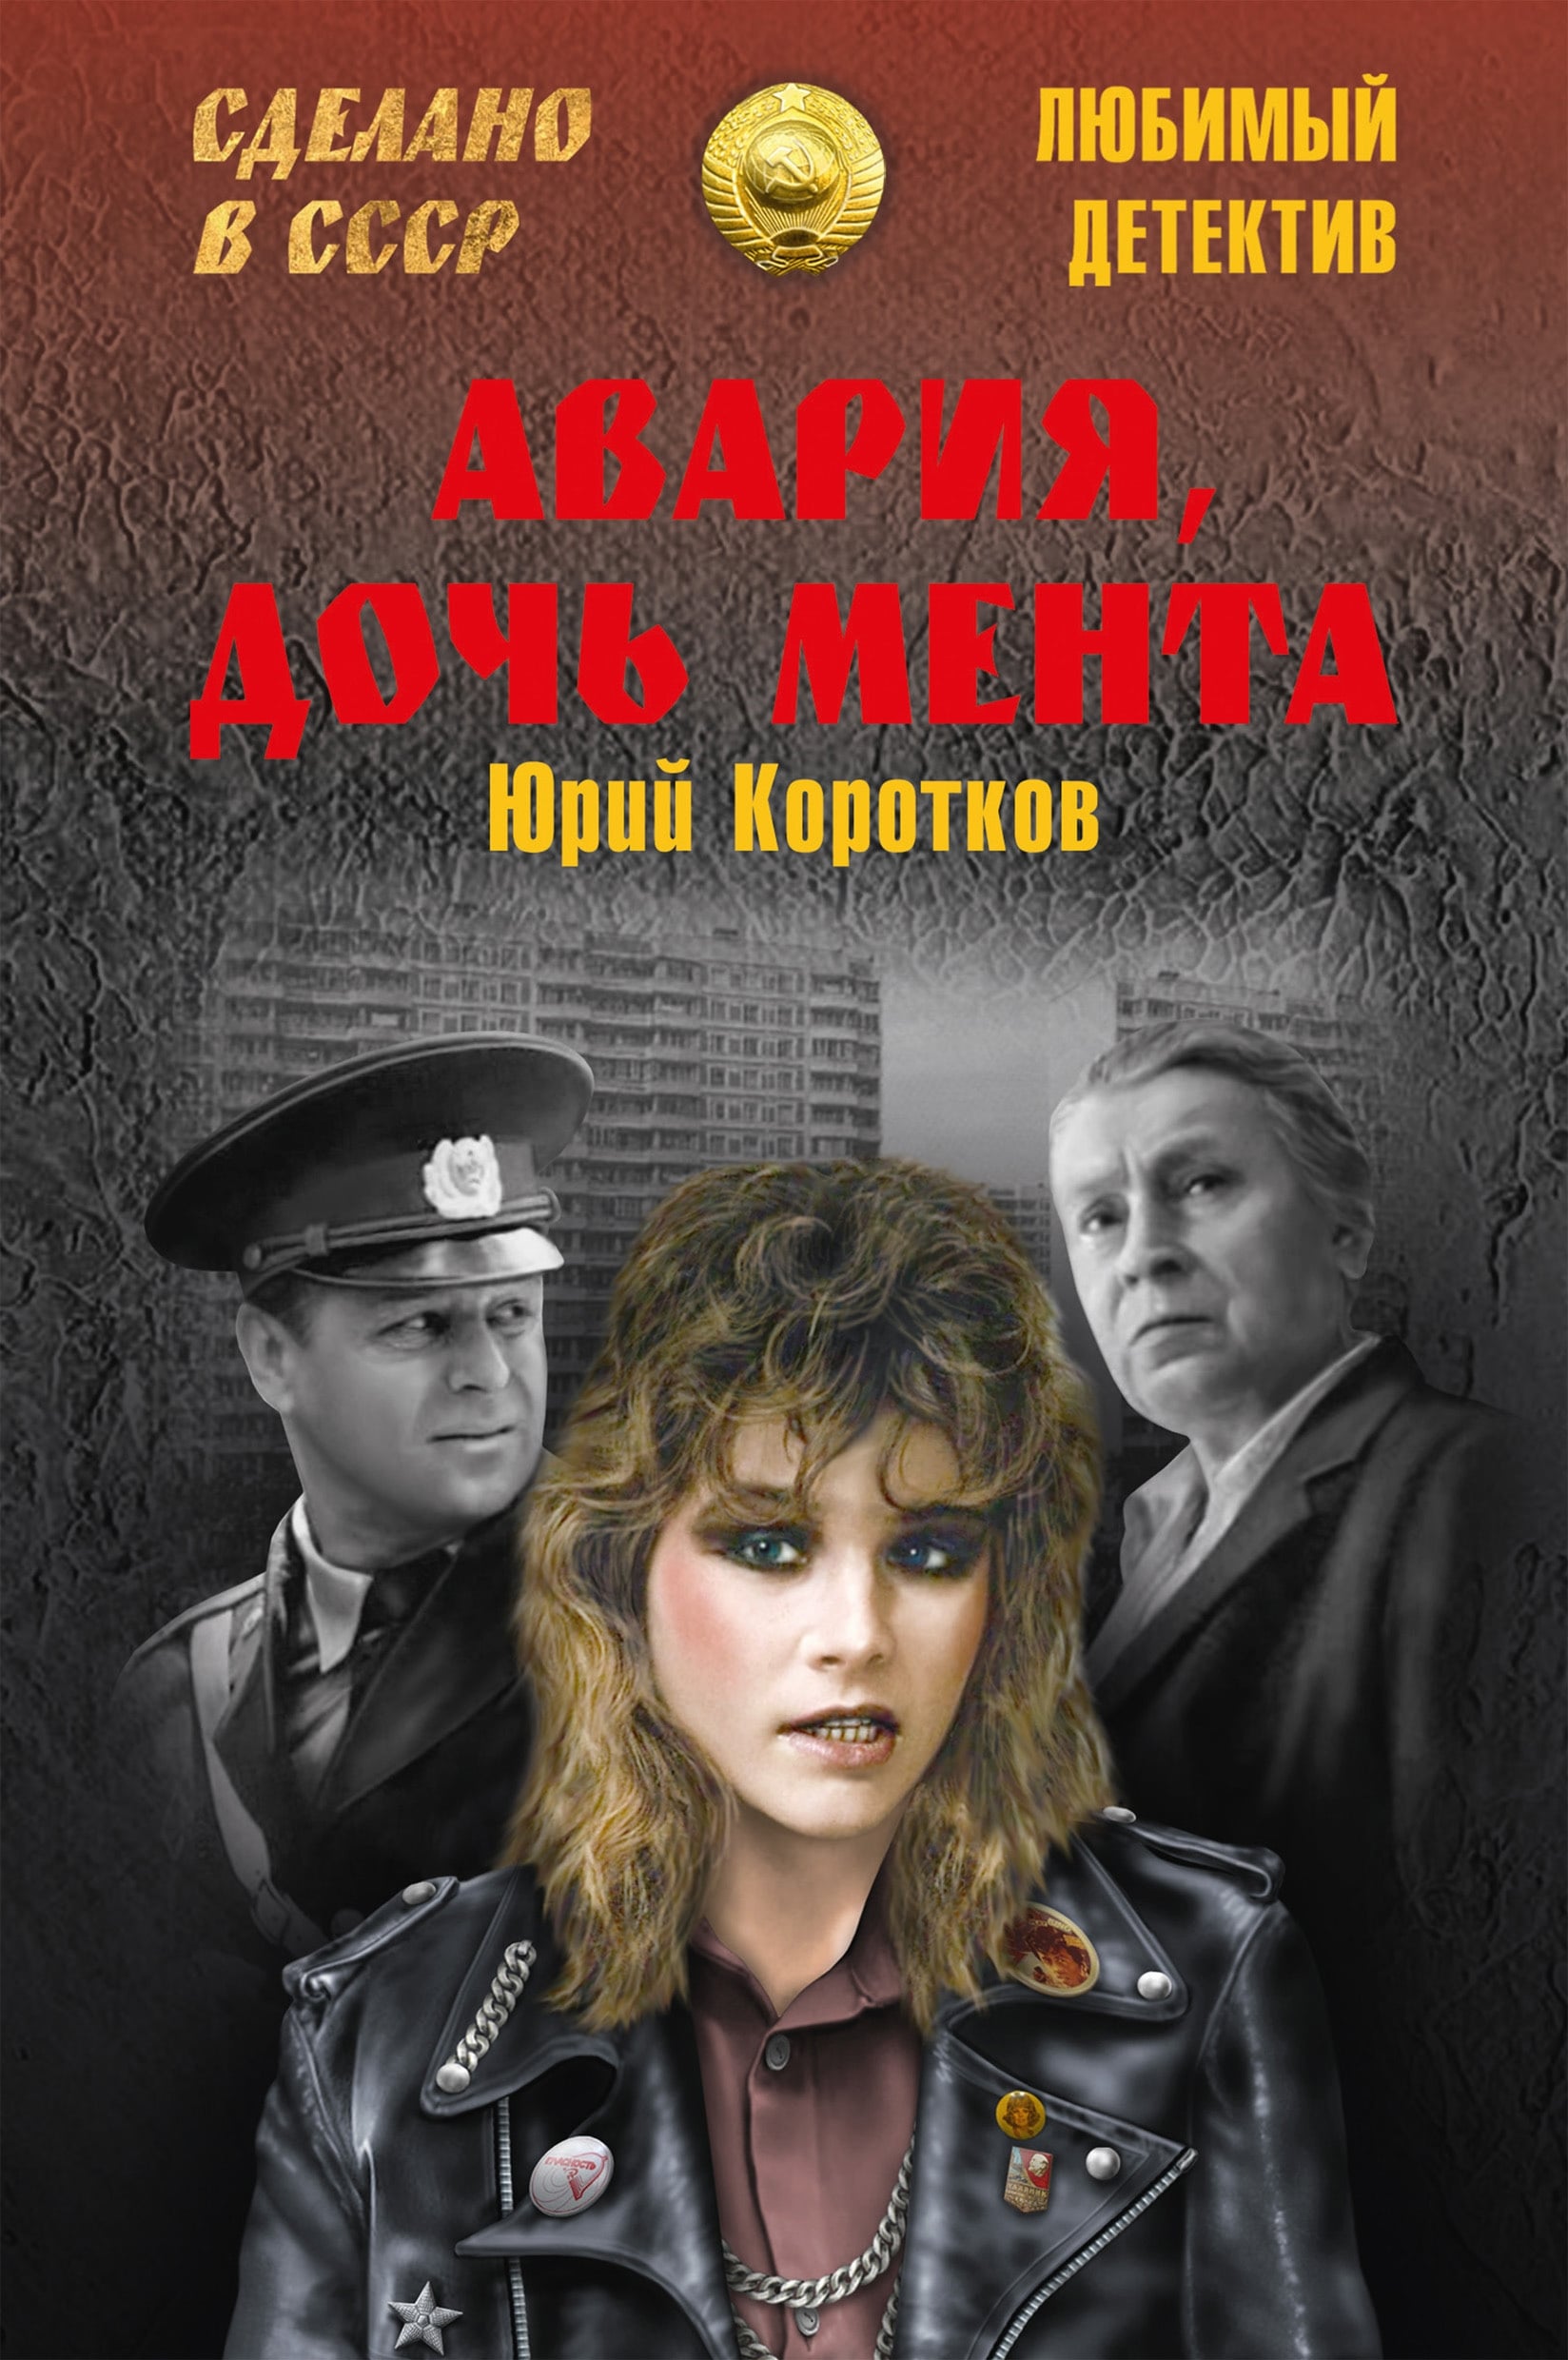 Avariya - Cop's Daughter (1989)